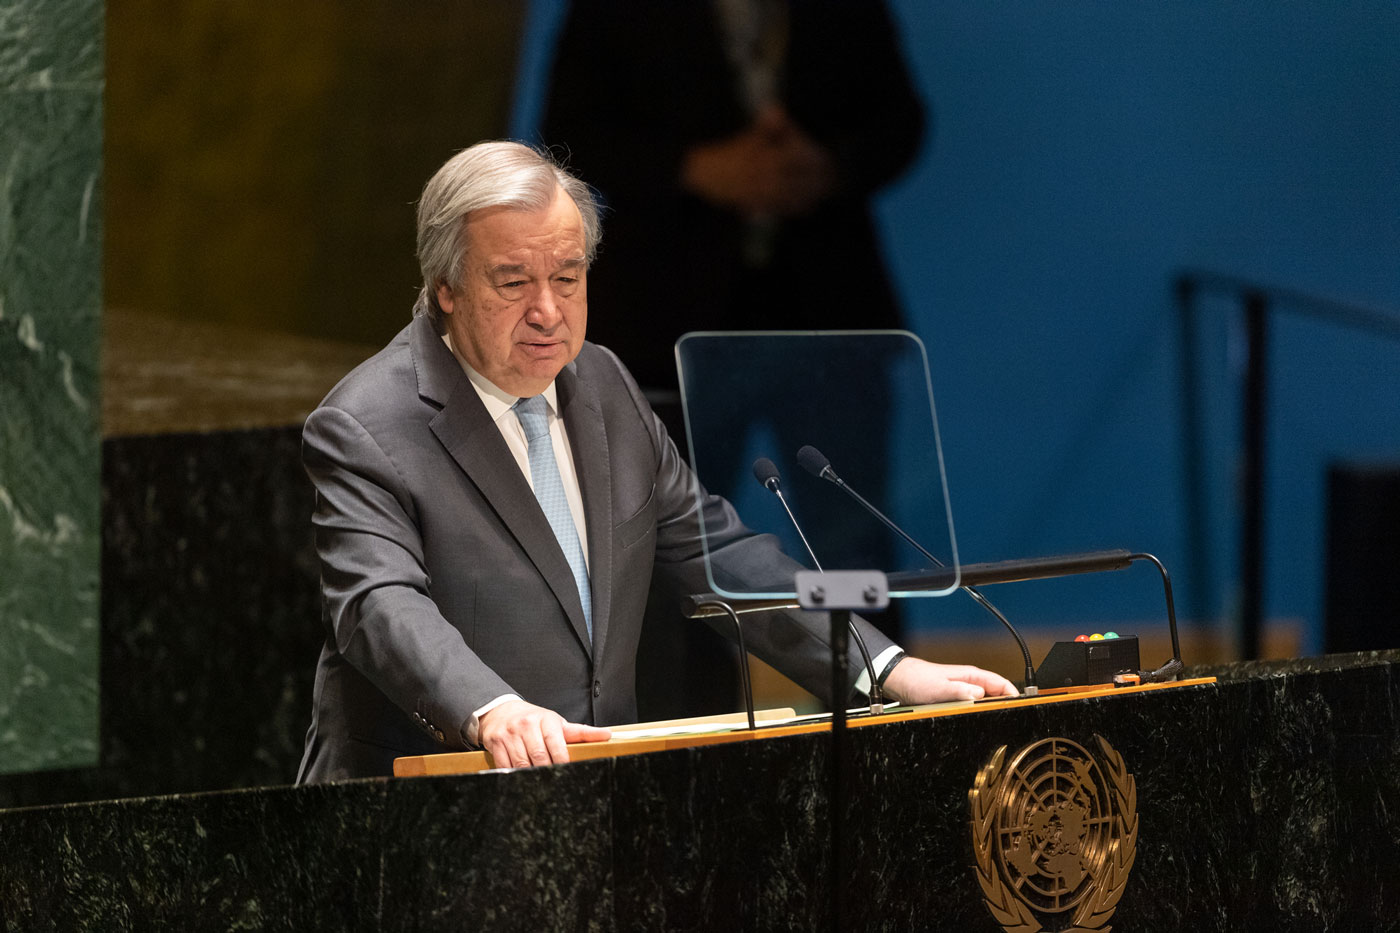 António Guterres at the GA podium